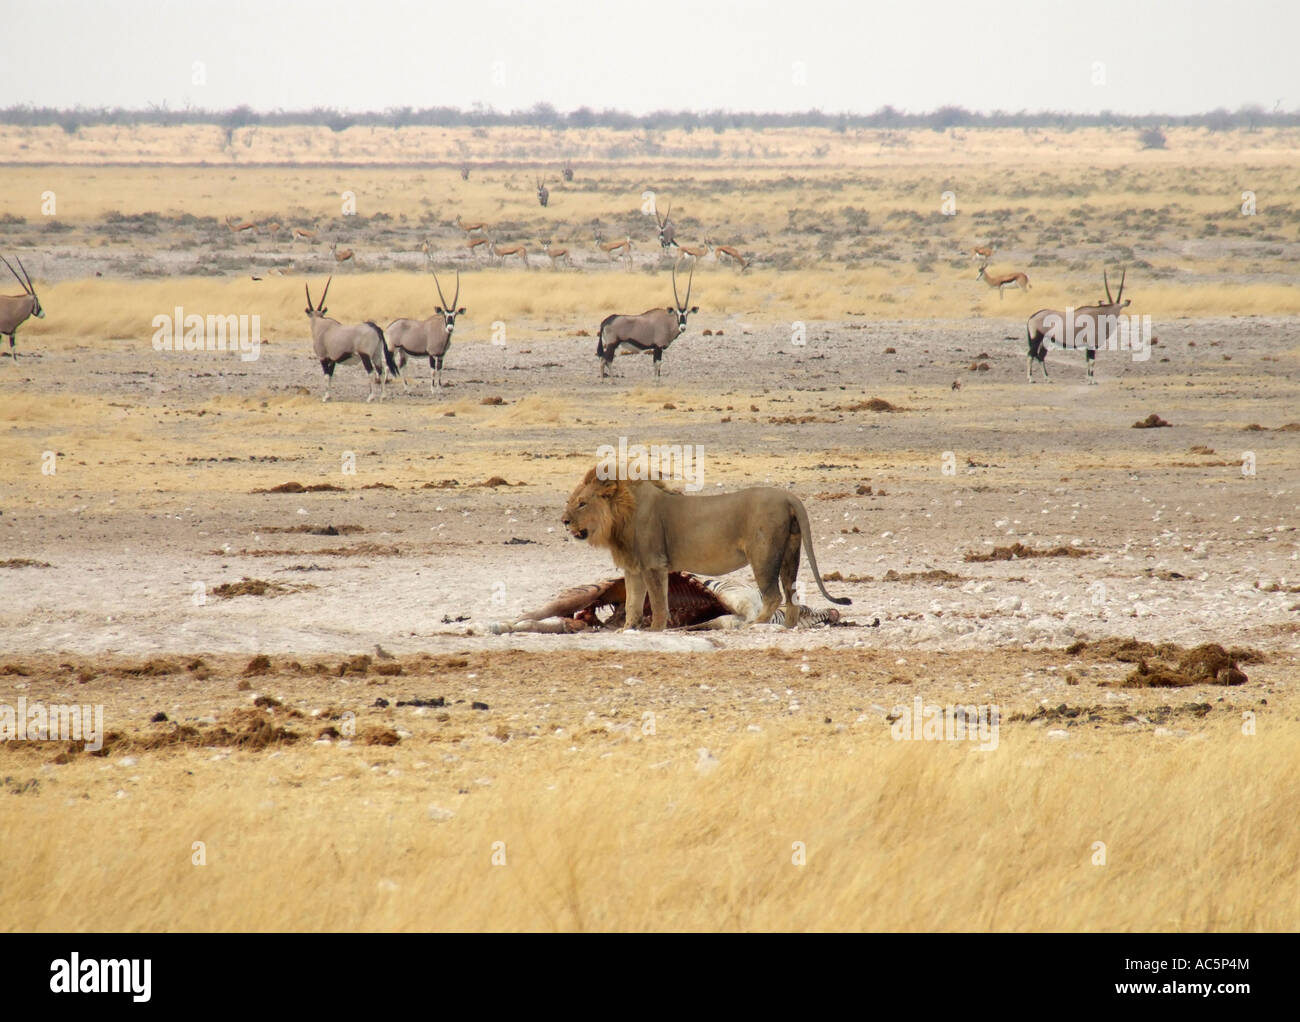 Animals in field Lion and gemsboks Namibia Stock Photo